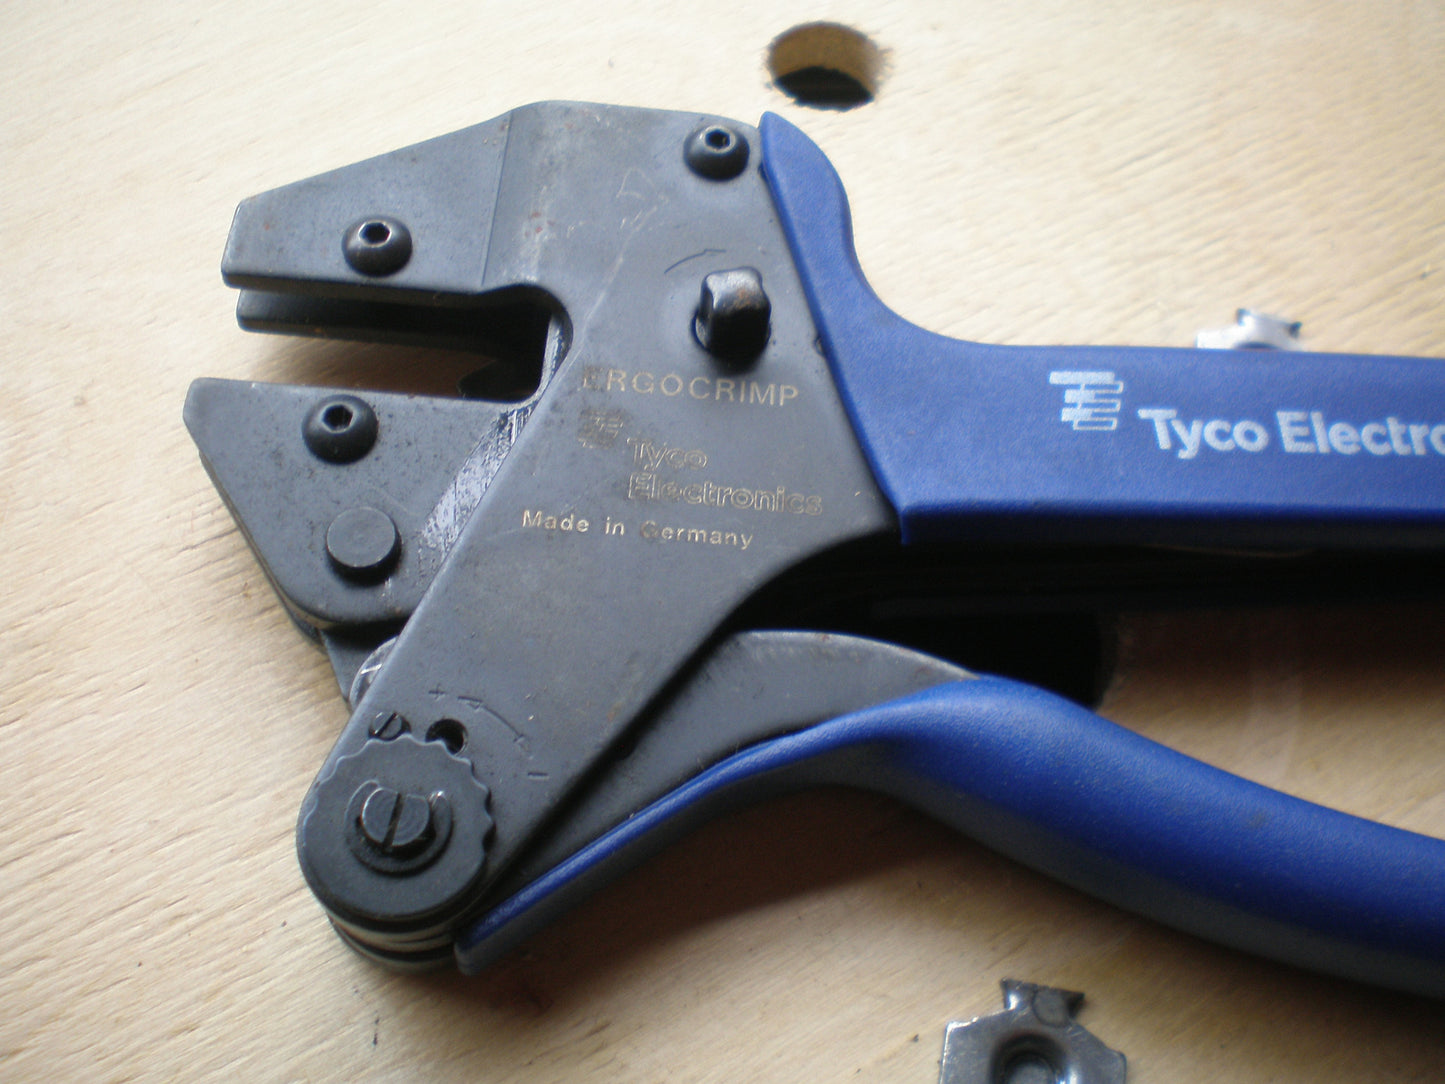 TYCO Electronics 539635-1 Ergoclamp crimping cutting tool